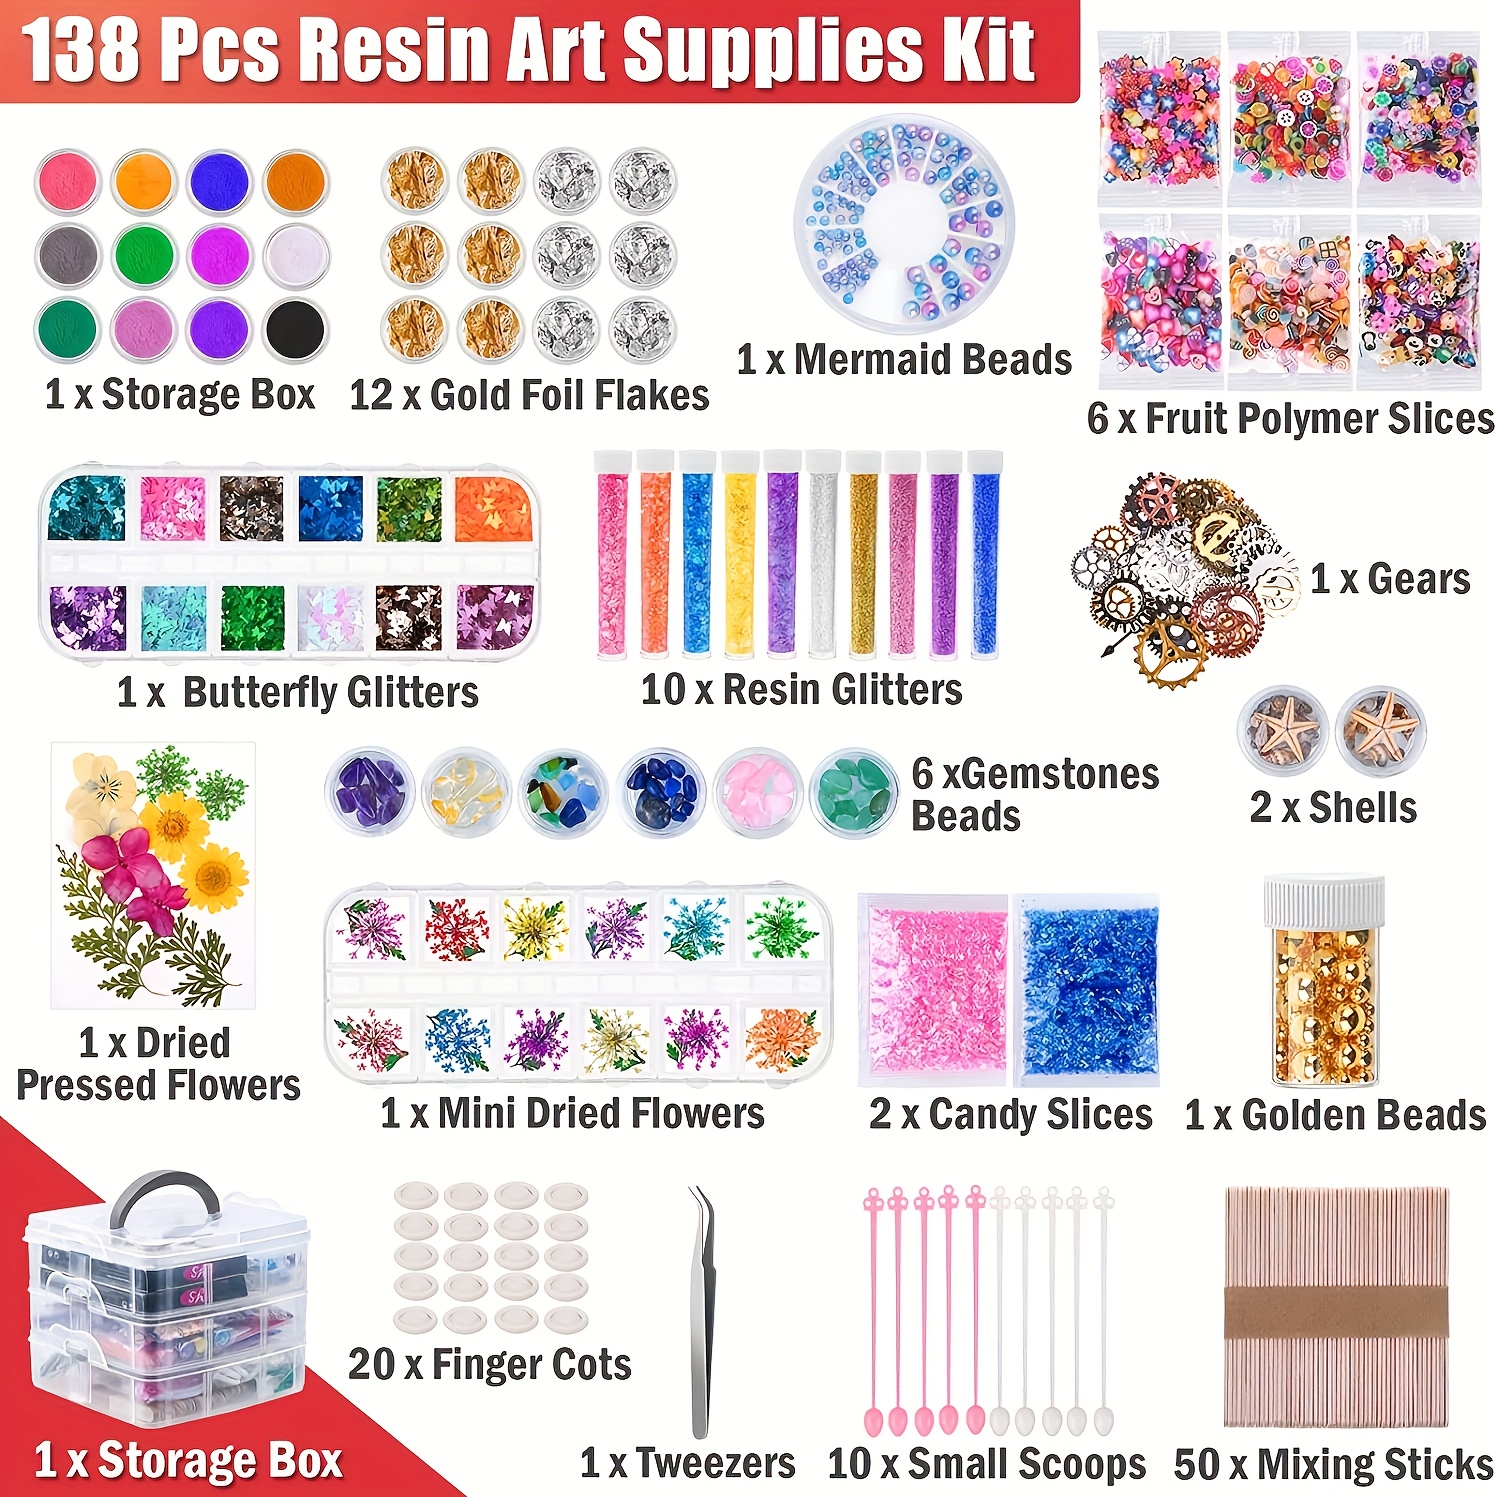 RESIN KIT Glitter Accessories Epoxy Starter Supplies Tools 164 Pcs